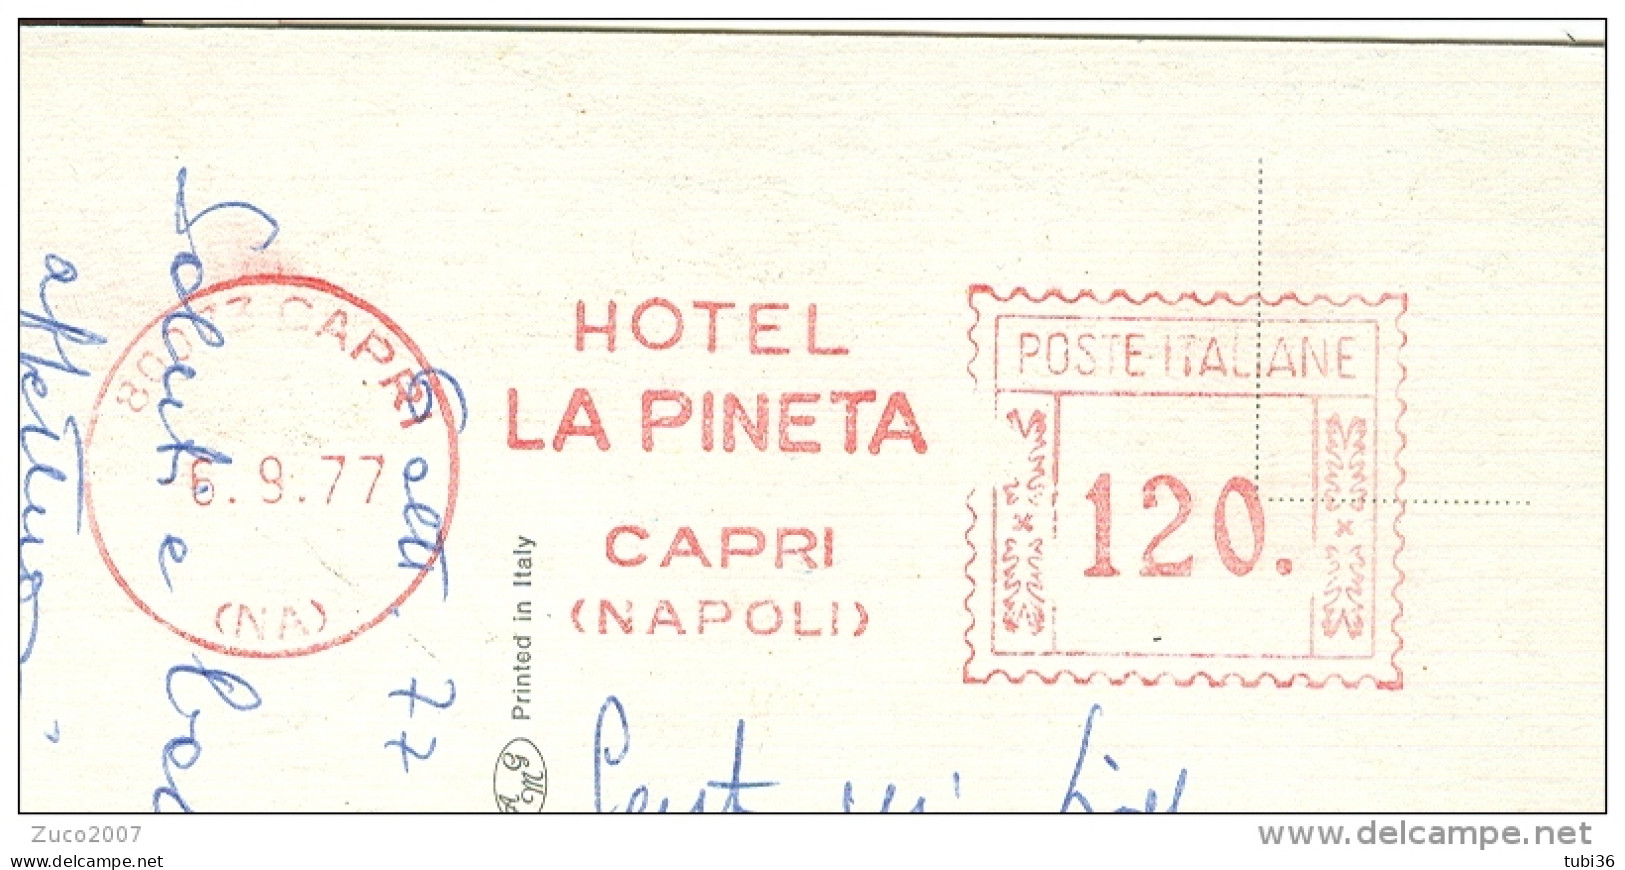 HOTEL LA PINETA, CAPRI, NAPOLI, AFFRANCATURA MECCANICA ROSSA £.120, 1977, CARTOLINA PER RAVENNA, - Hostelería - Horesca